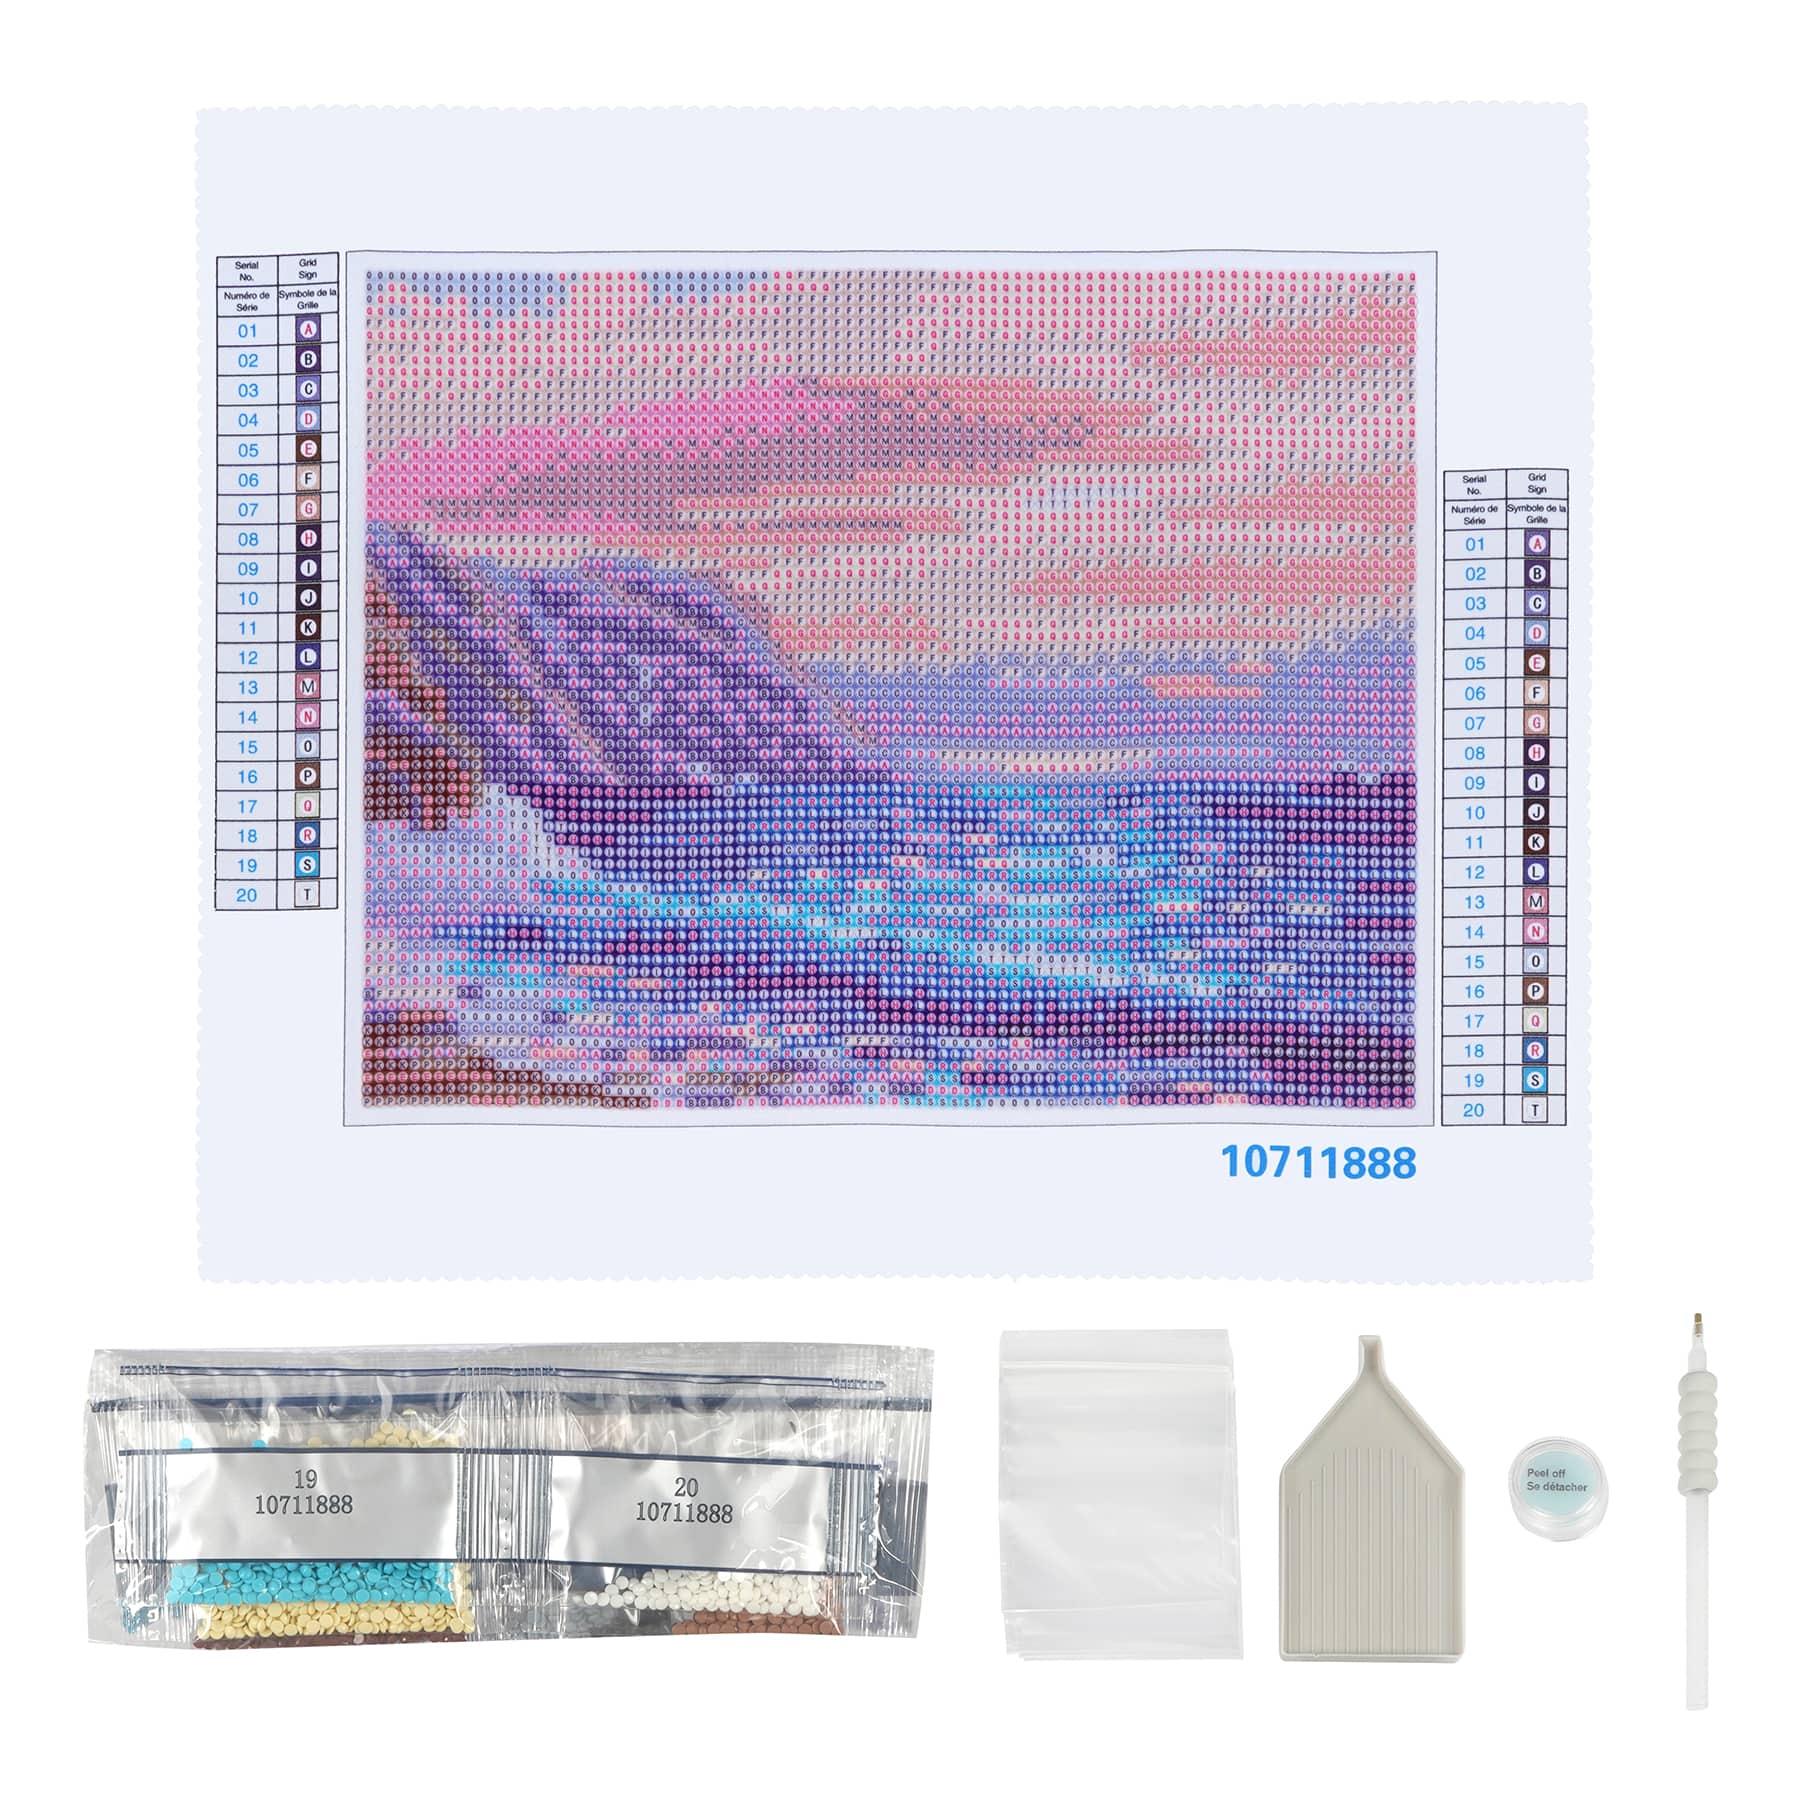 6 Pack: Seascape Painting Diamond Art Kit by Make Market&#xAE;